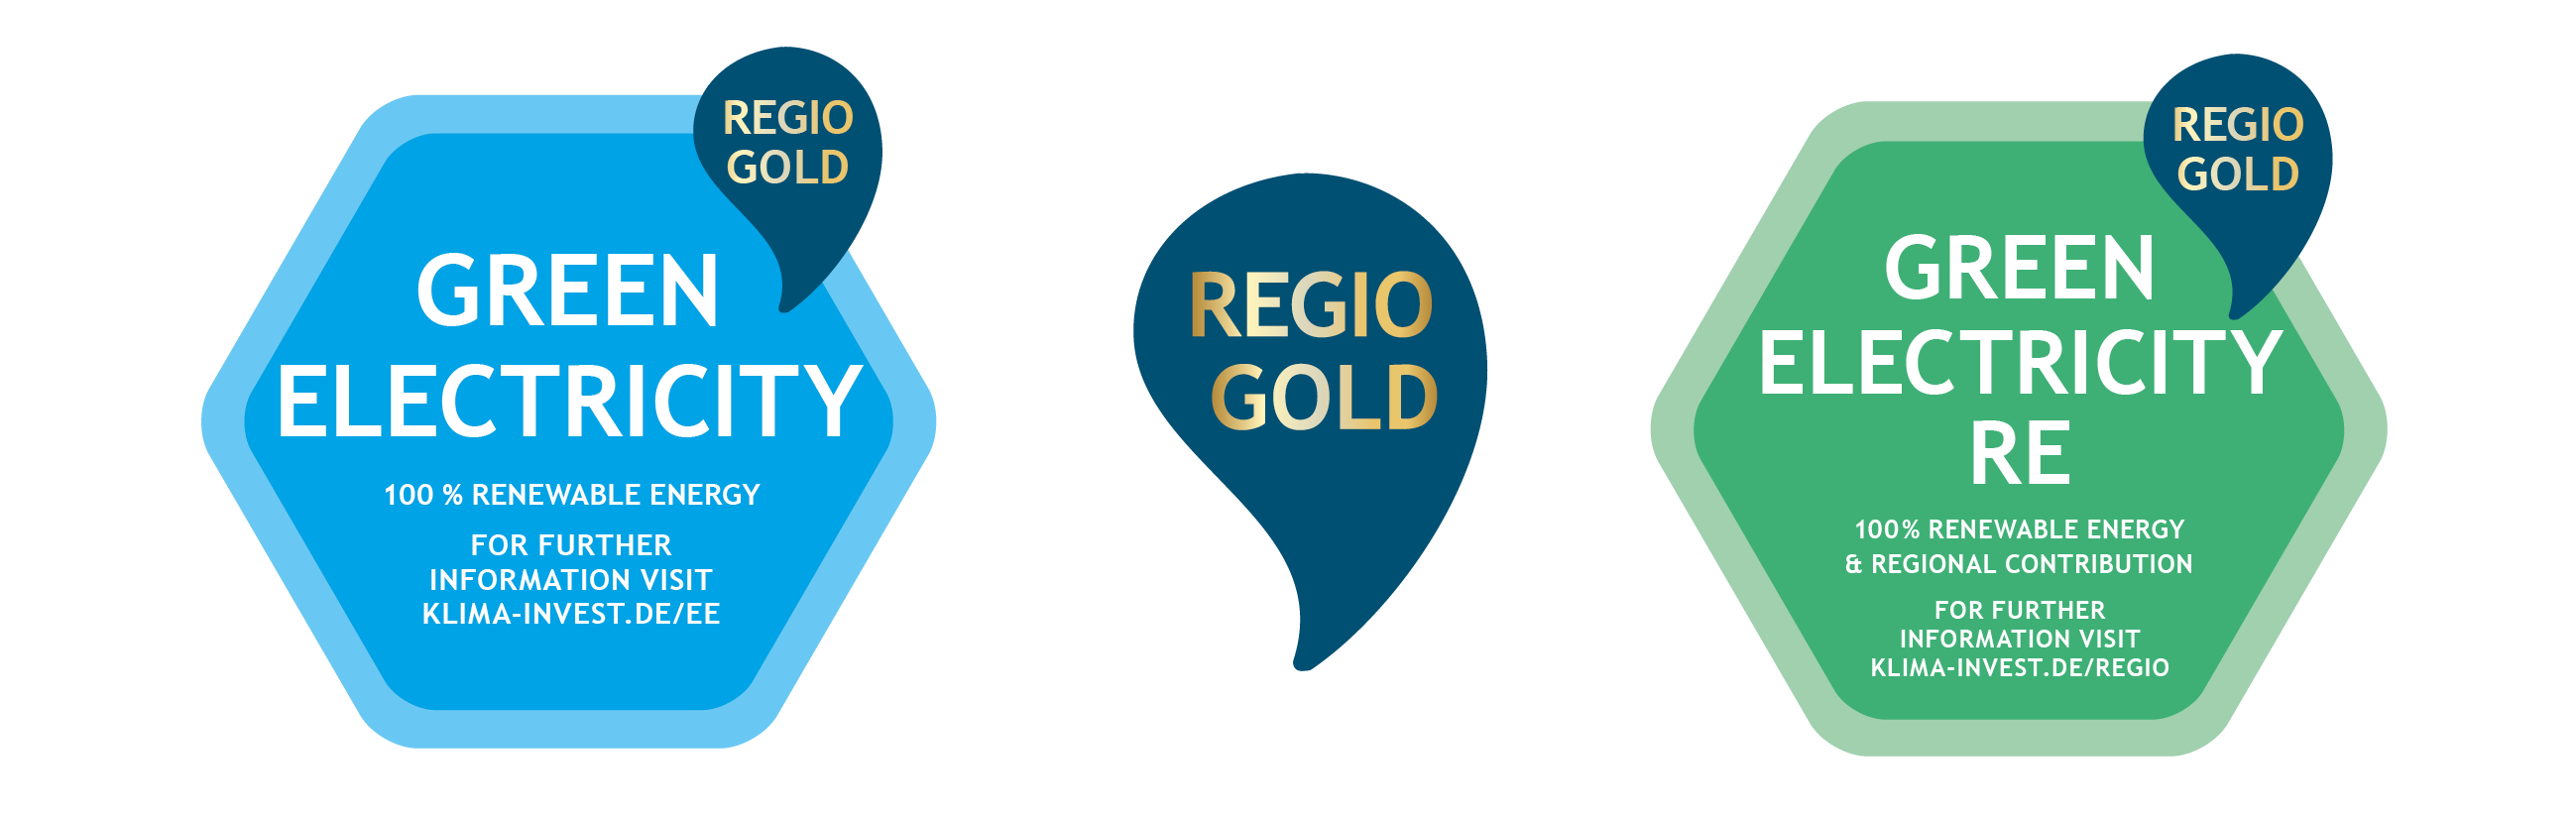 Regio gold logo